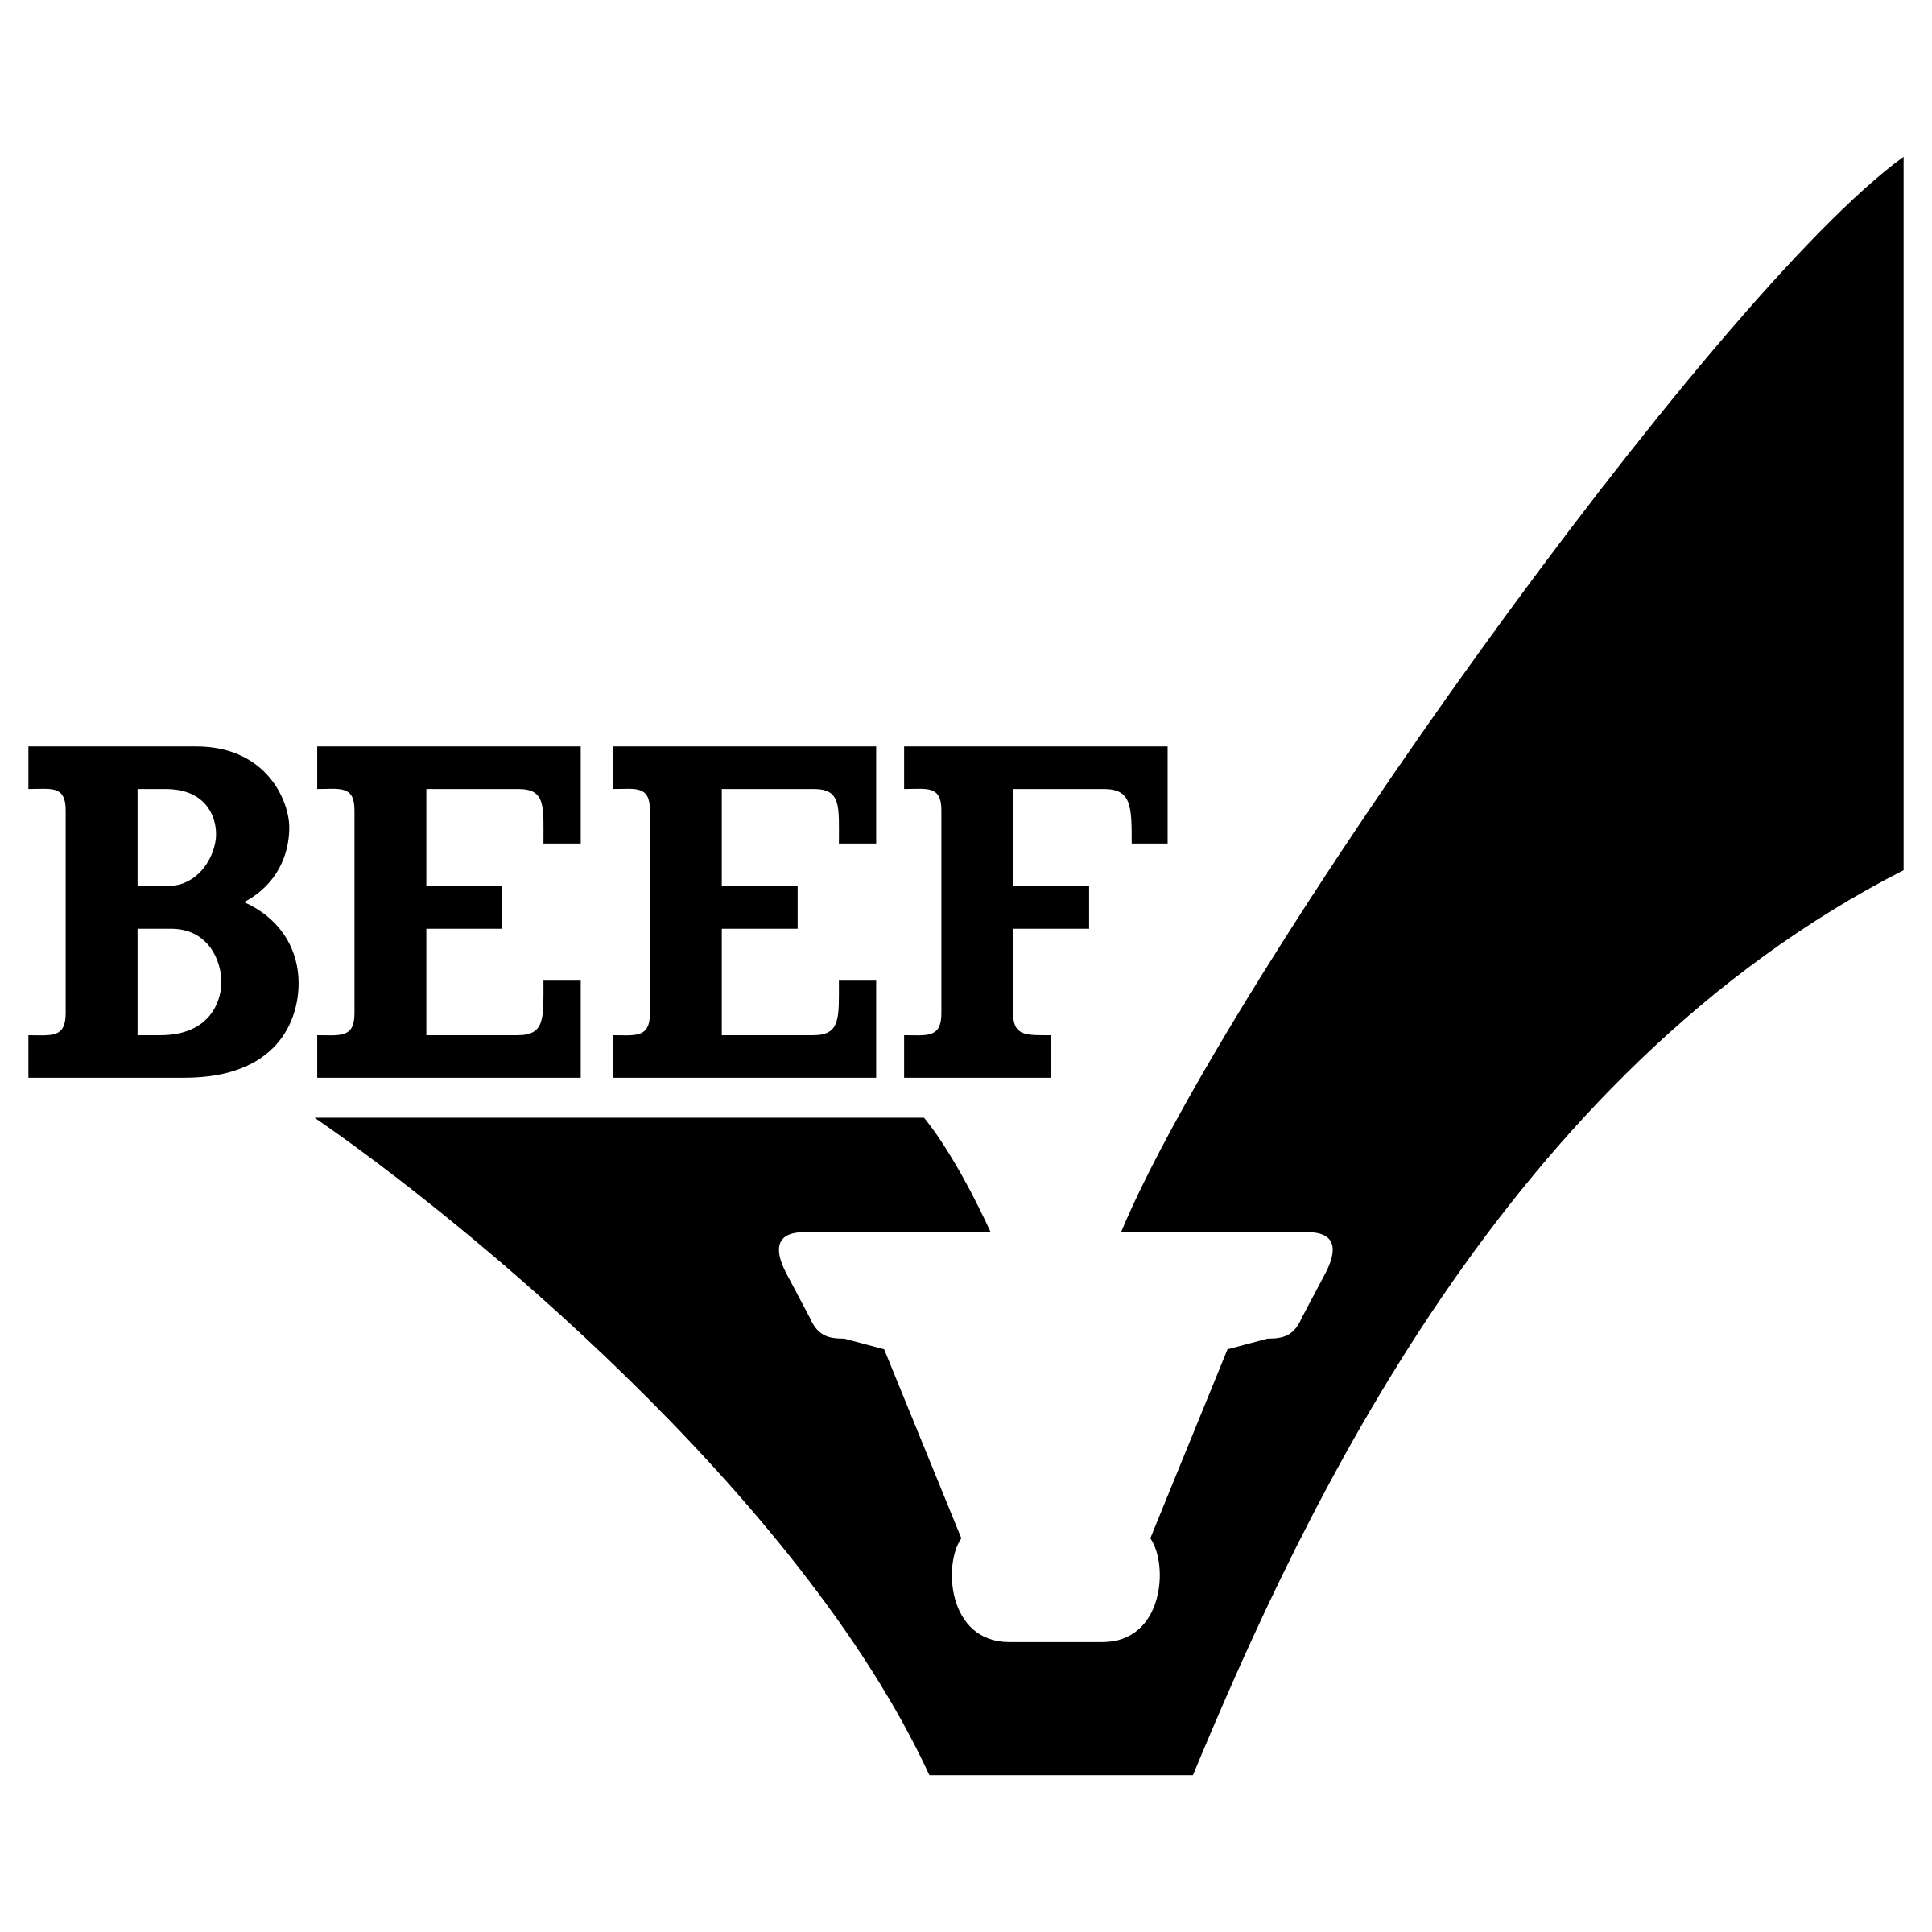 Beef Logo - BEEF Logo PNG Transparent & SVG Vector